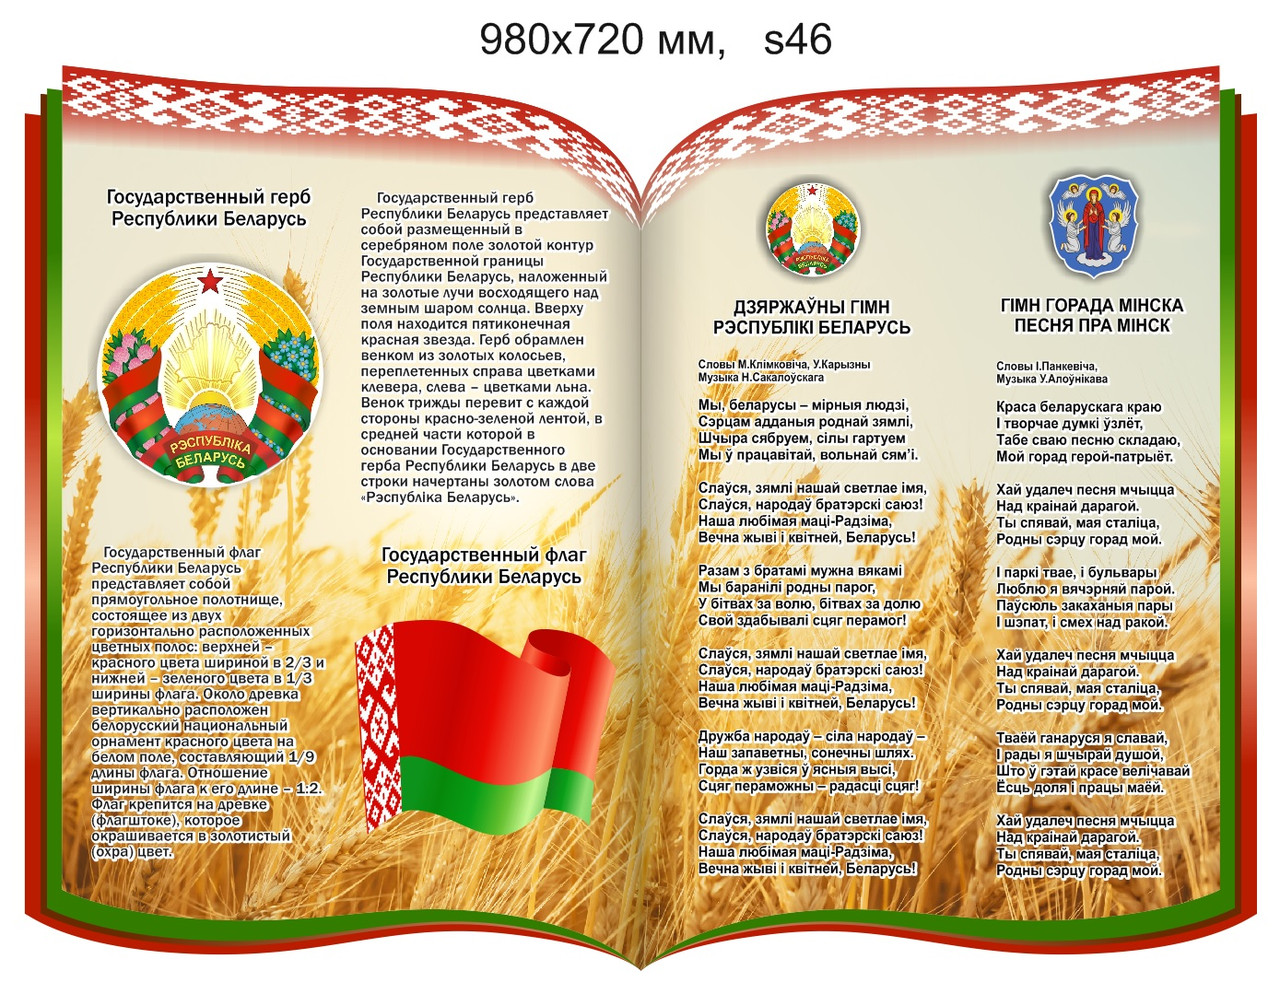 Стенд с символикой и президентом Республики Беларусь. 980х720 мм